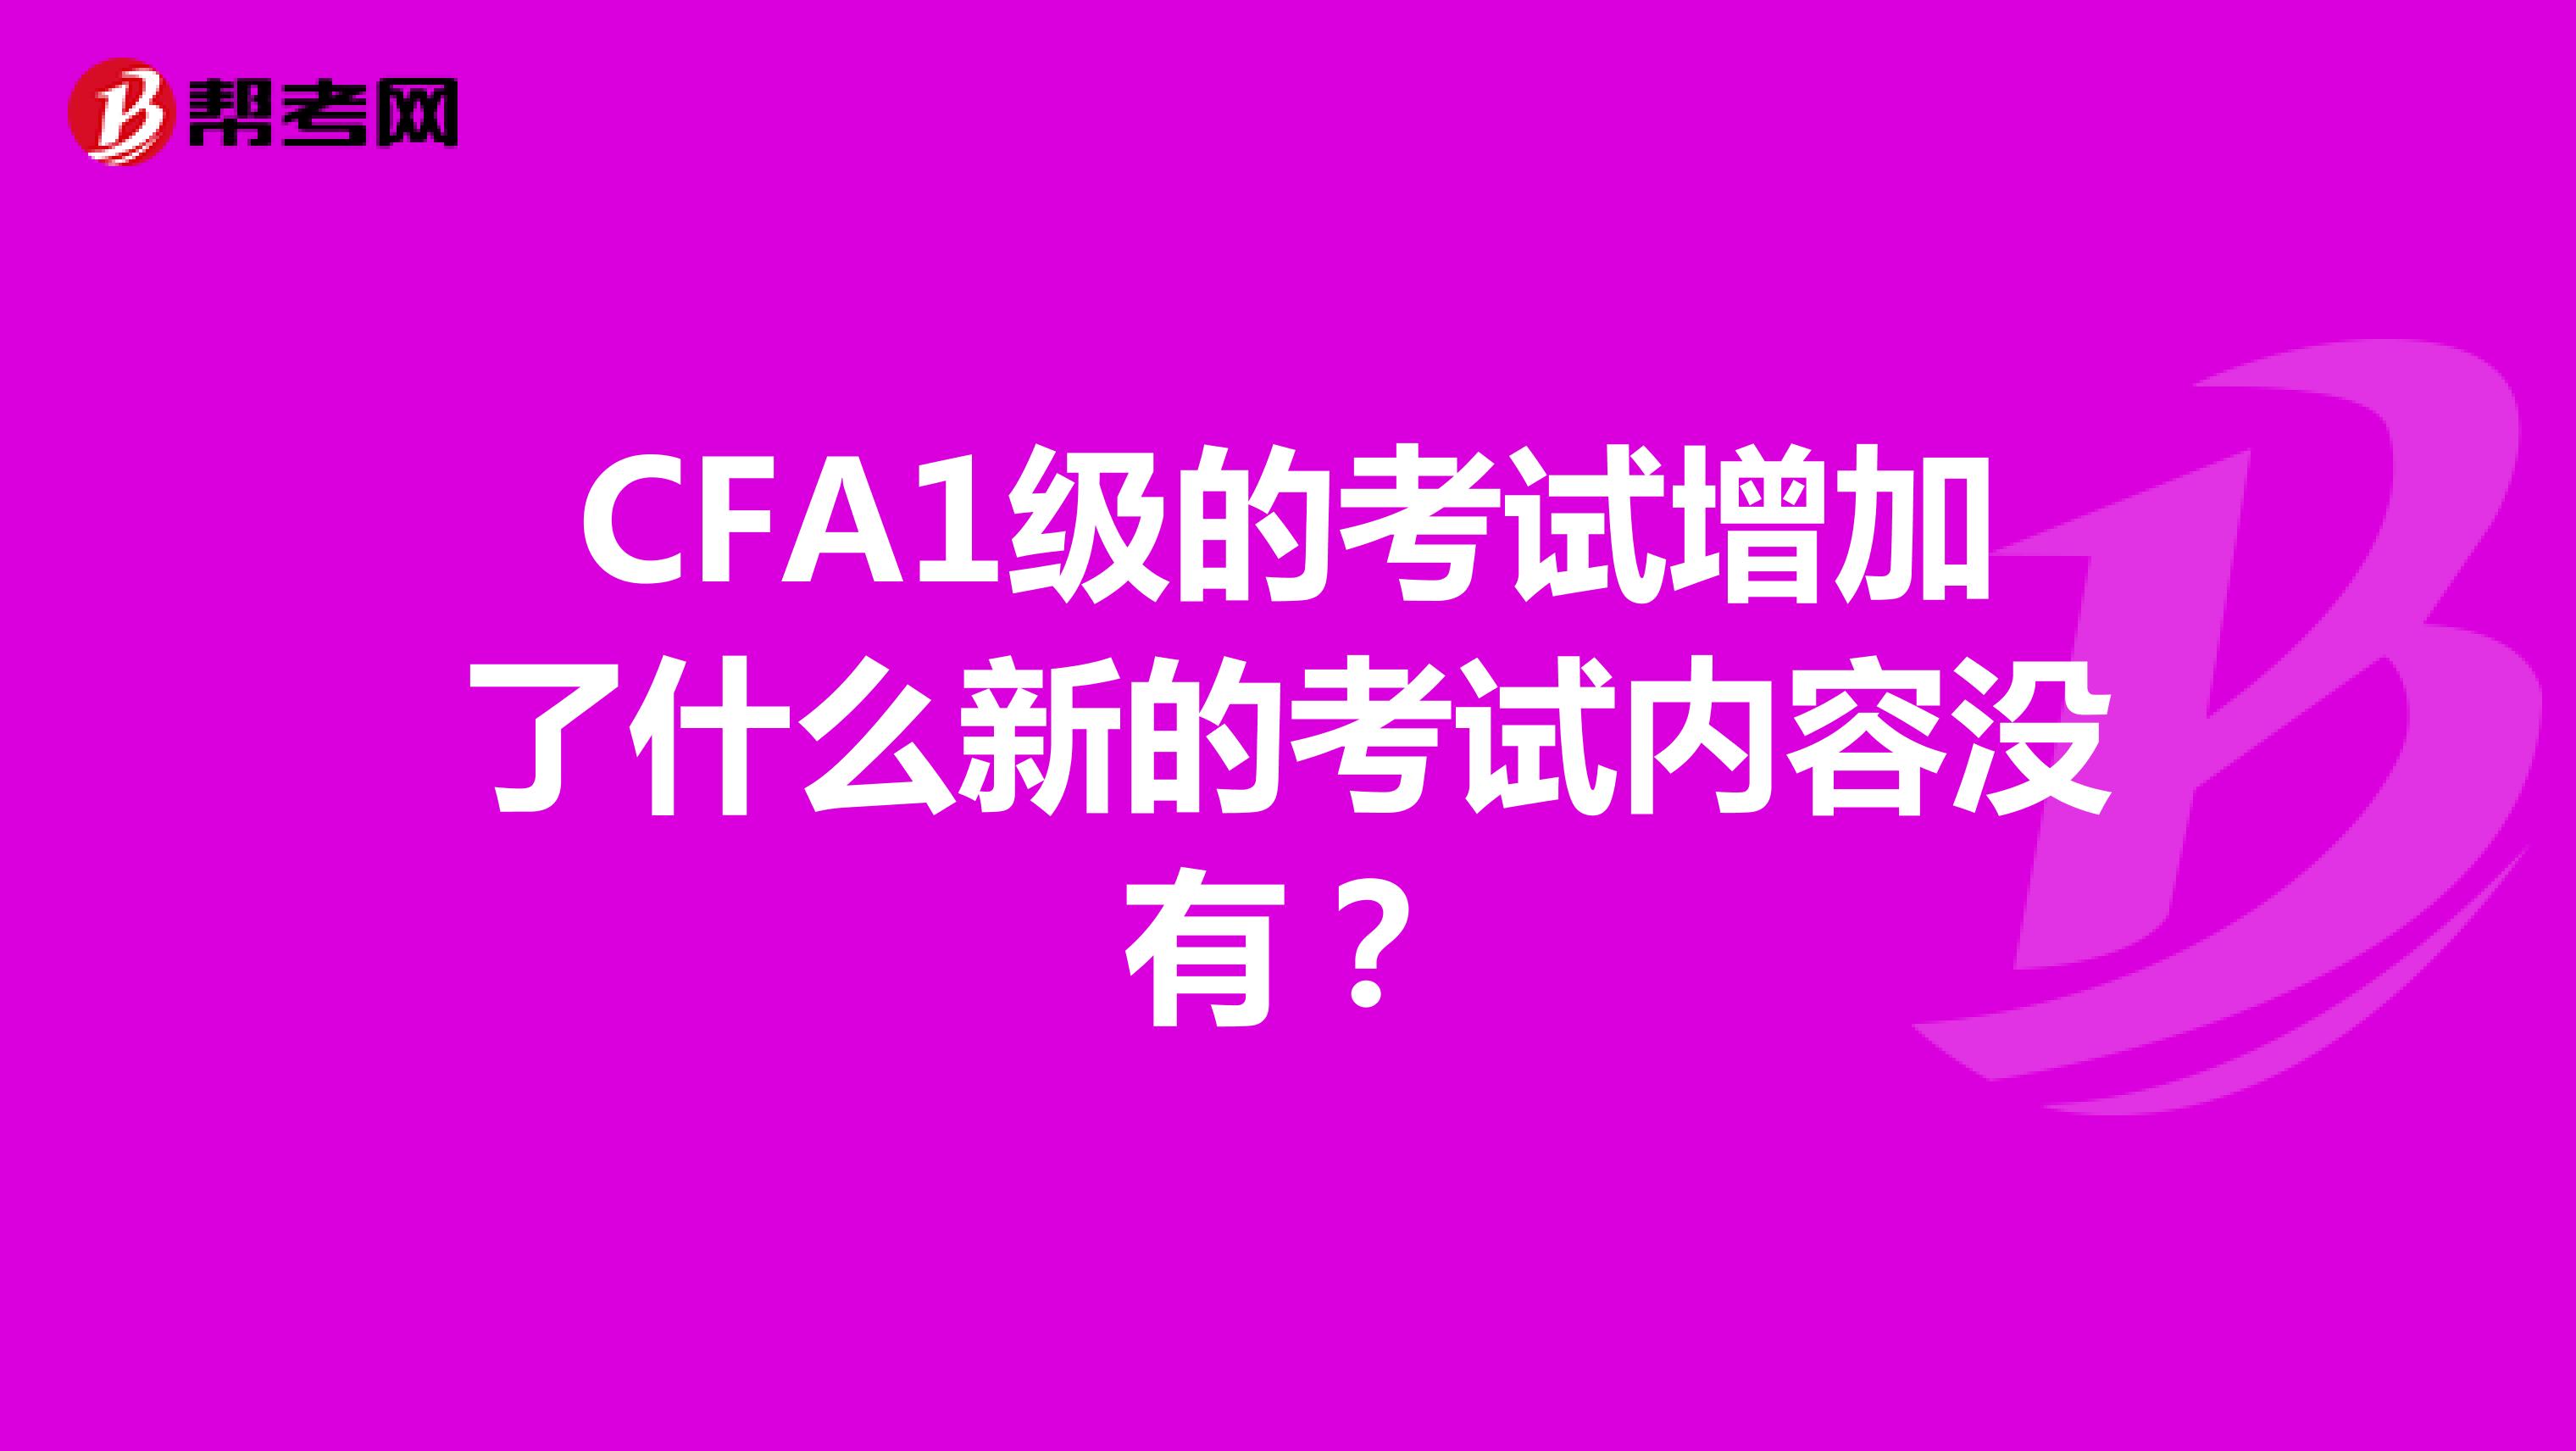 CFA1级的考试增加了什么新的考试内容没有？